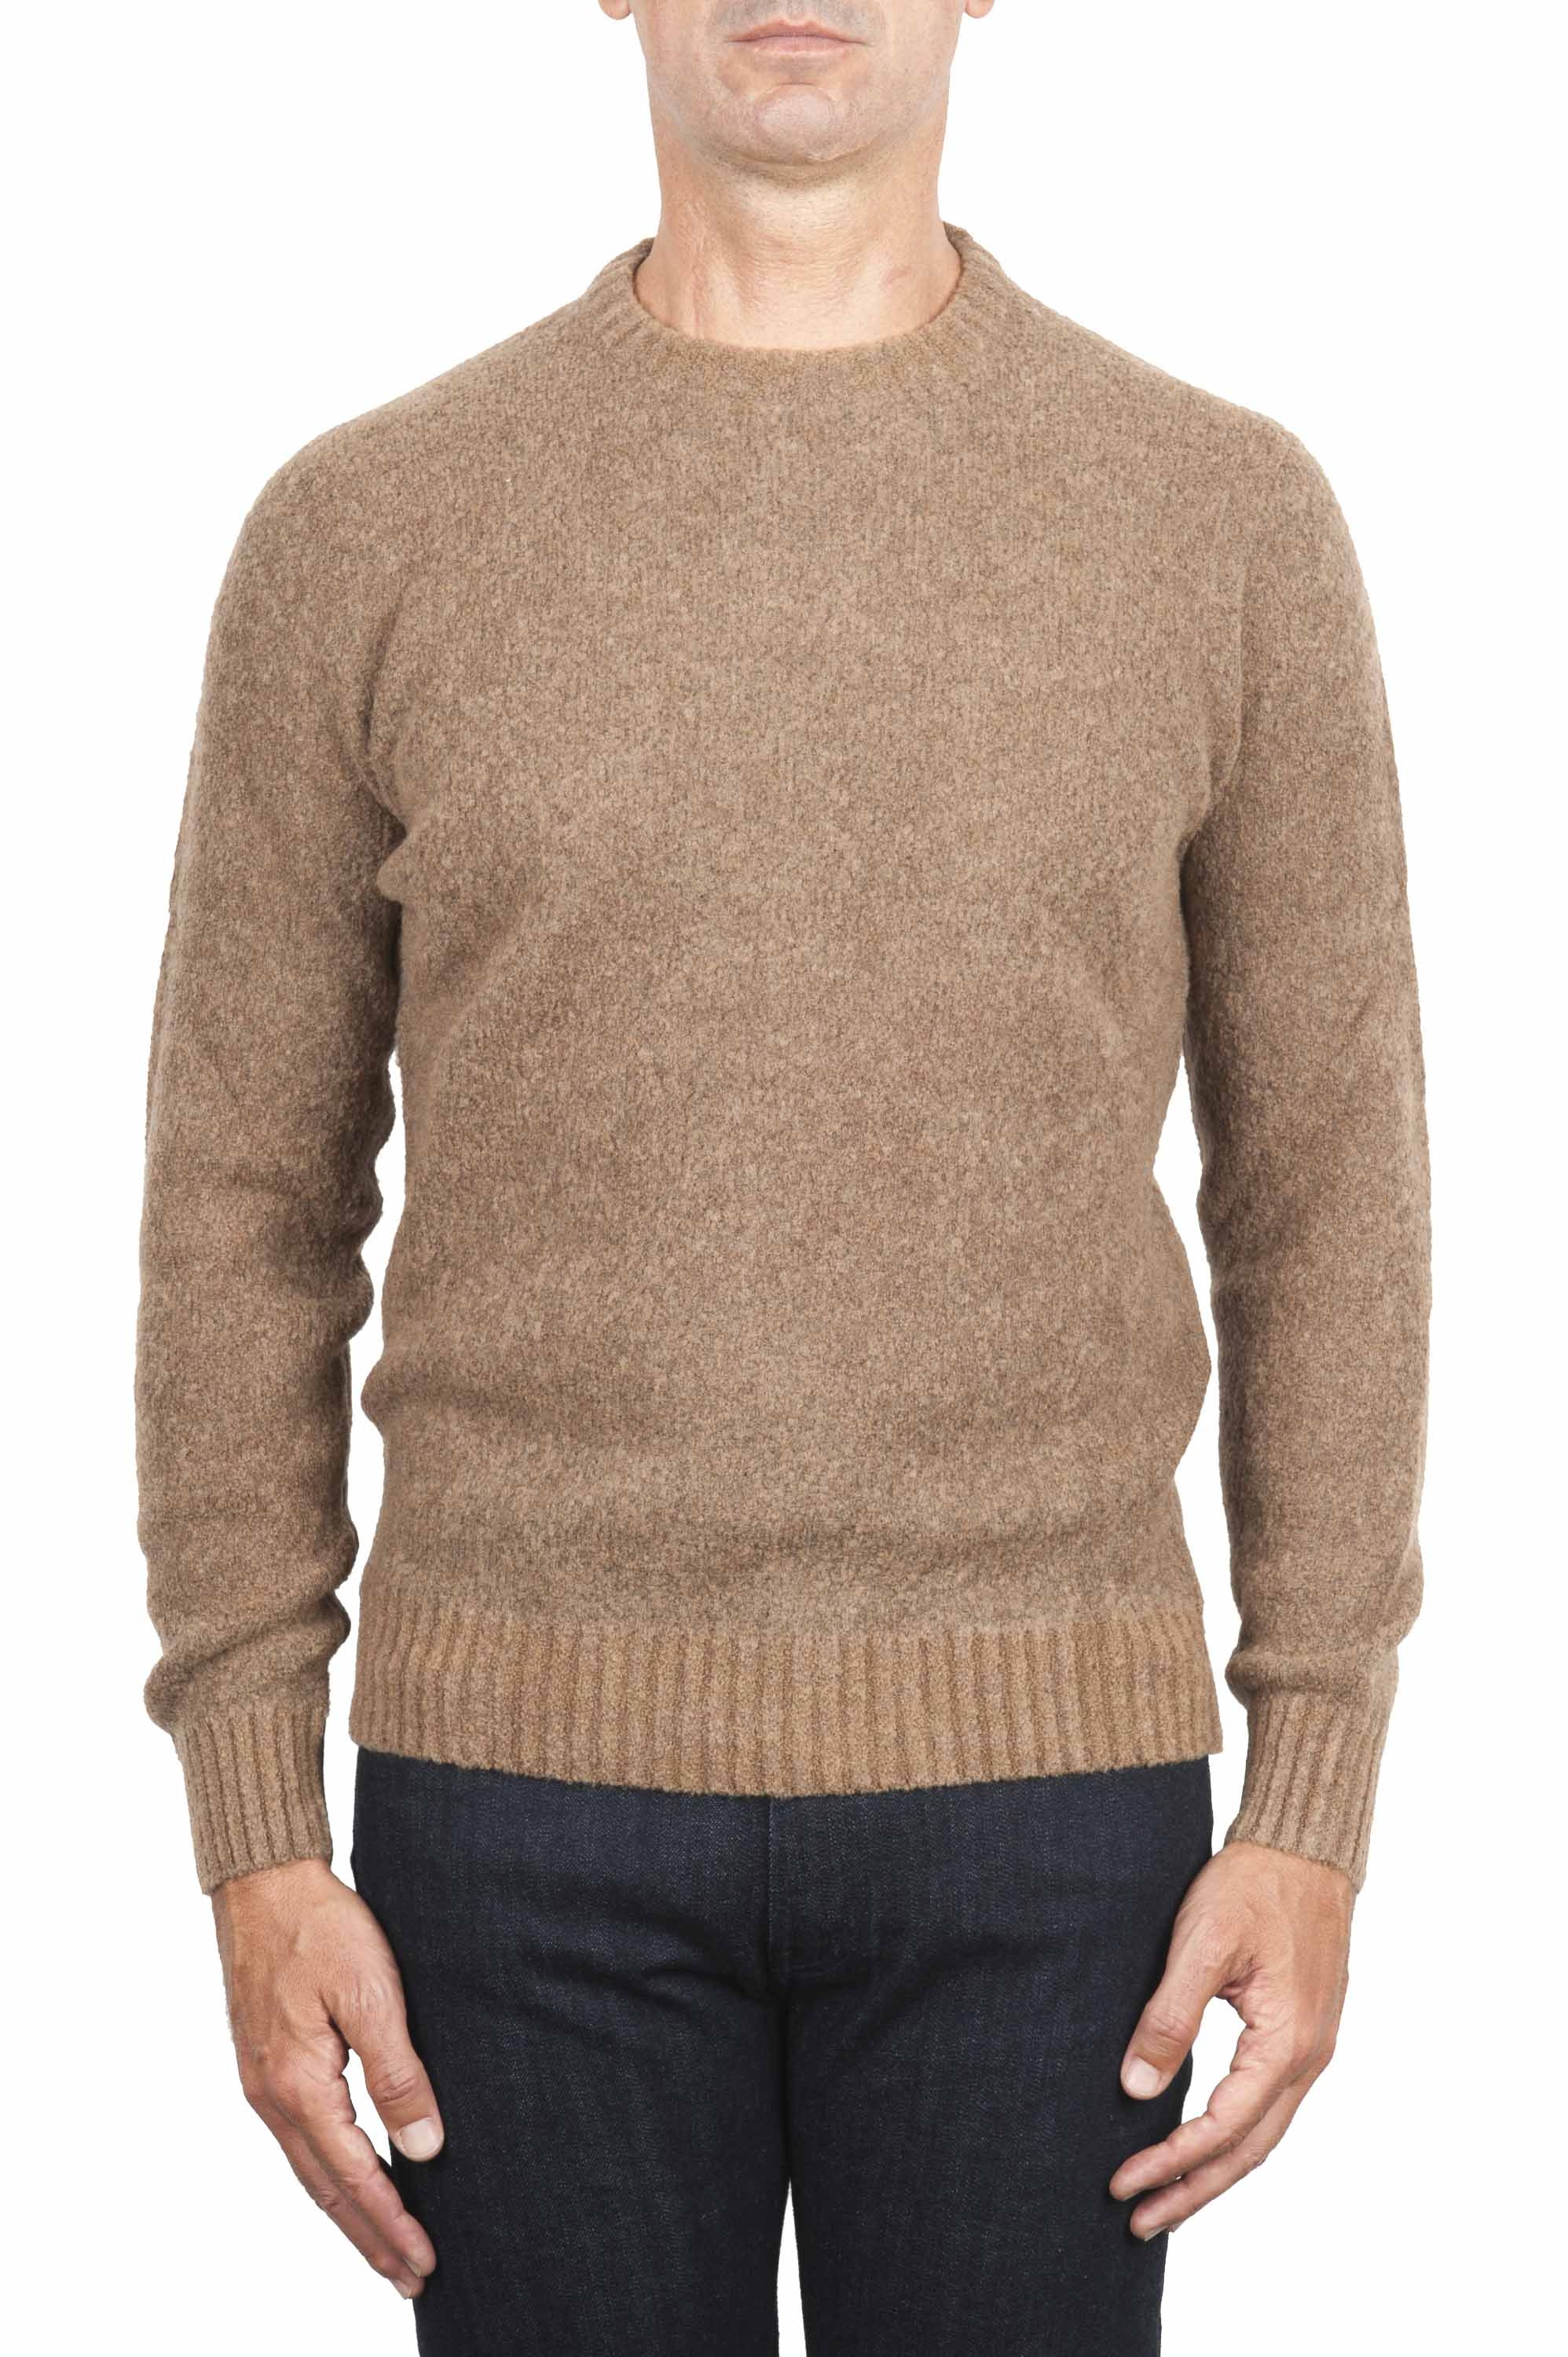 SBU 01470 Beige crew neck sweater in boucle merino wool extra fine 01